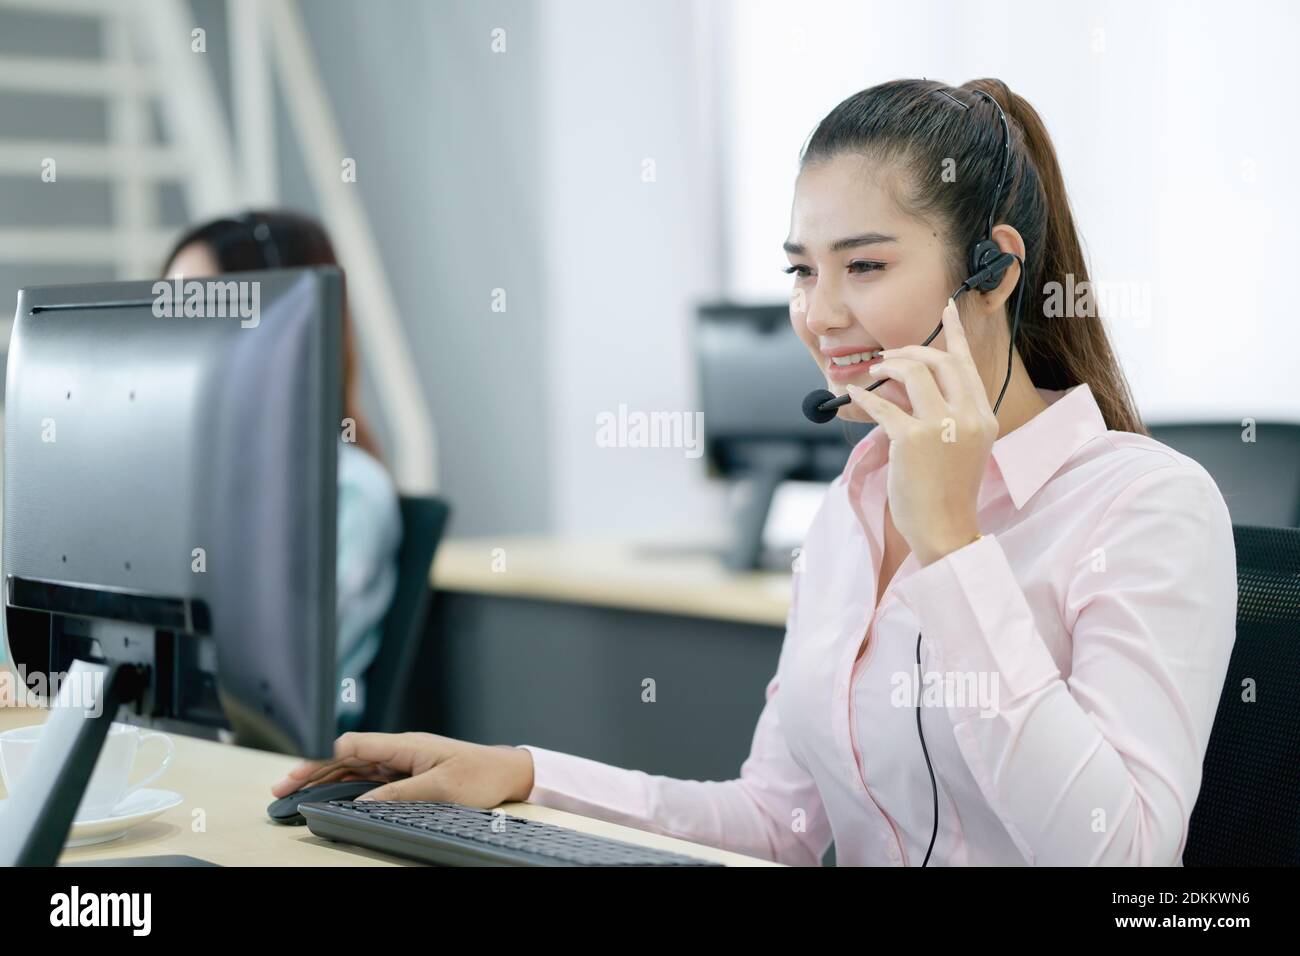 Customer Service Representative Using Computer At Office Desk Stock Photo